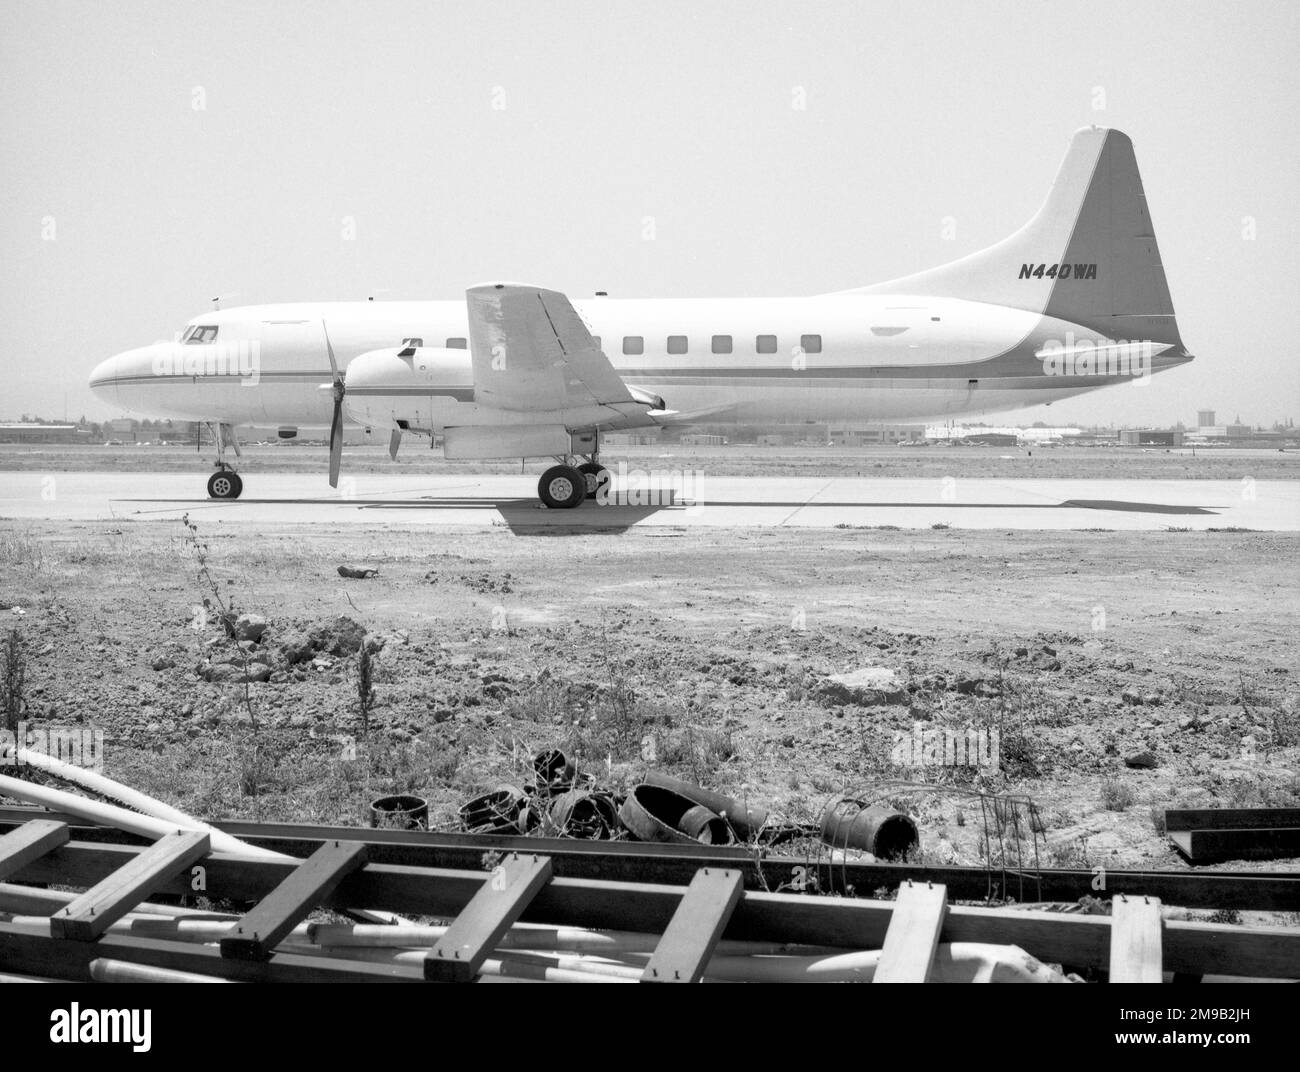 Convair CV-440 N440WA (msn 340-005), de World Airways, à l'aéroport de Rome en novembre 1973. Banque D'Images